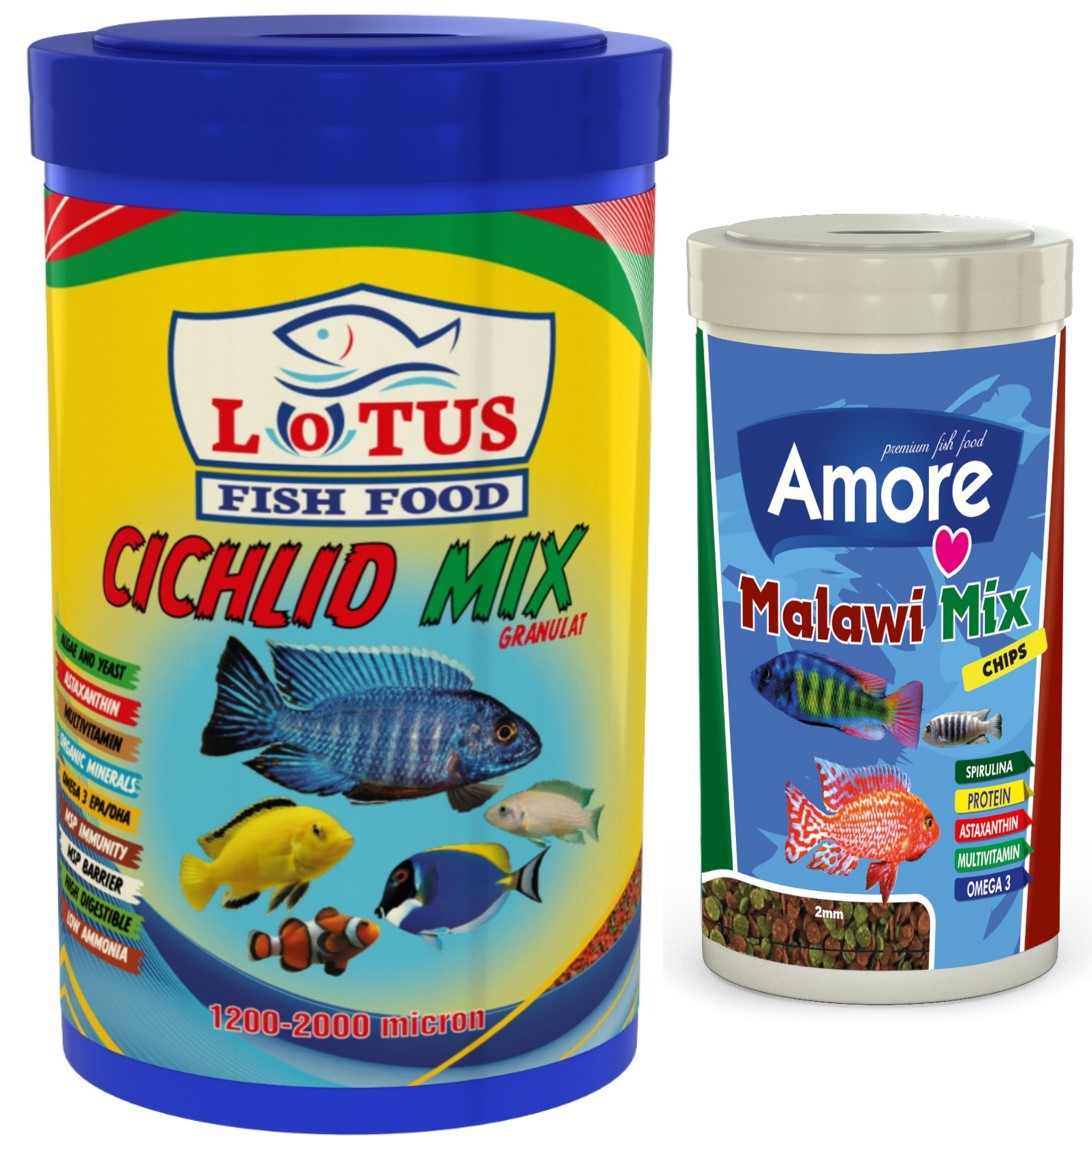 Lotus Cichlid Mix 1000ml Ve Amore Malawi Mix Chips 250ml Akvaryum Balık Yemi